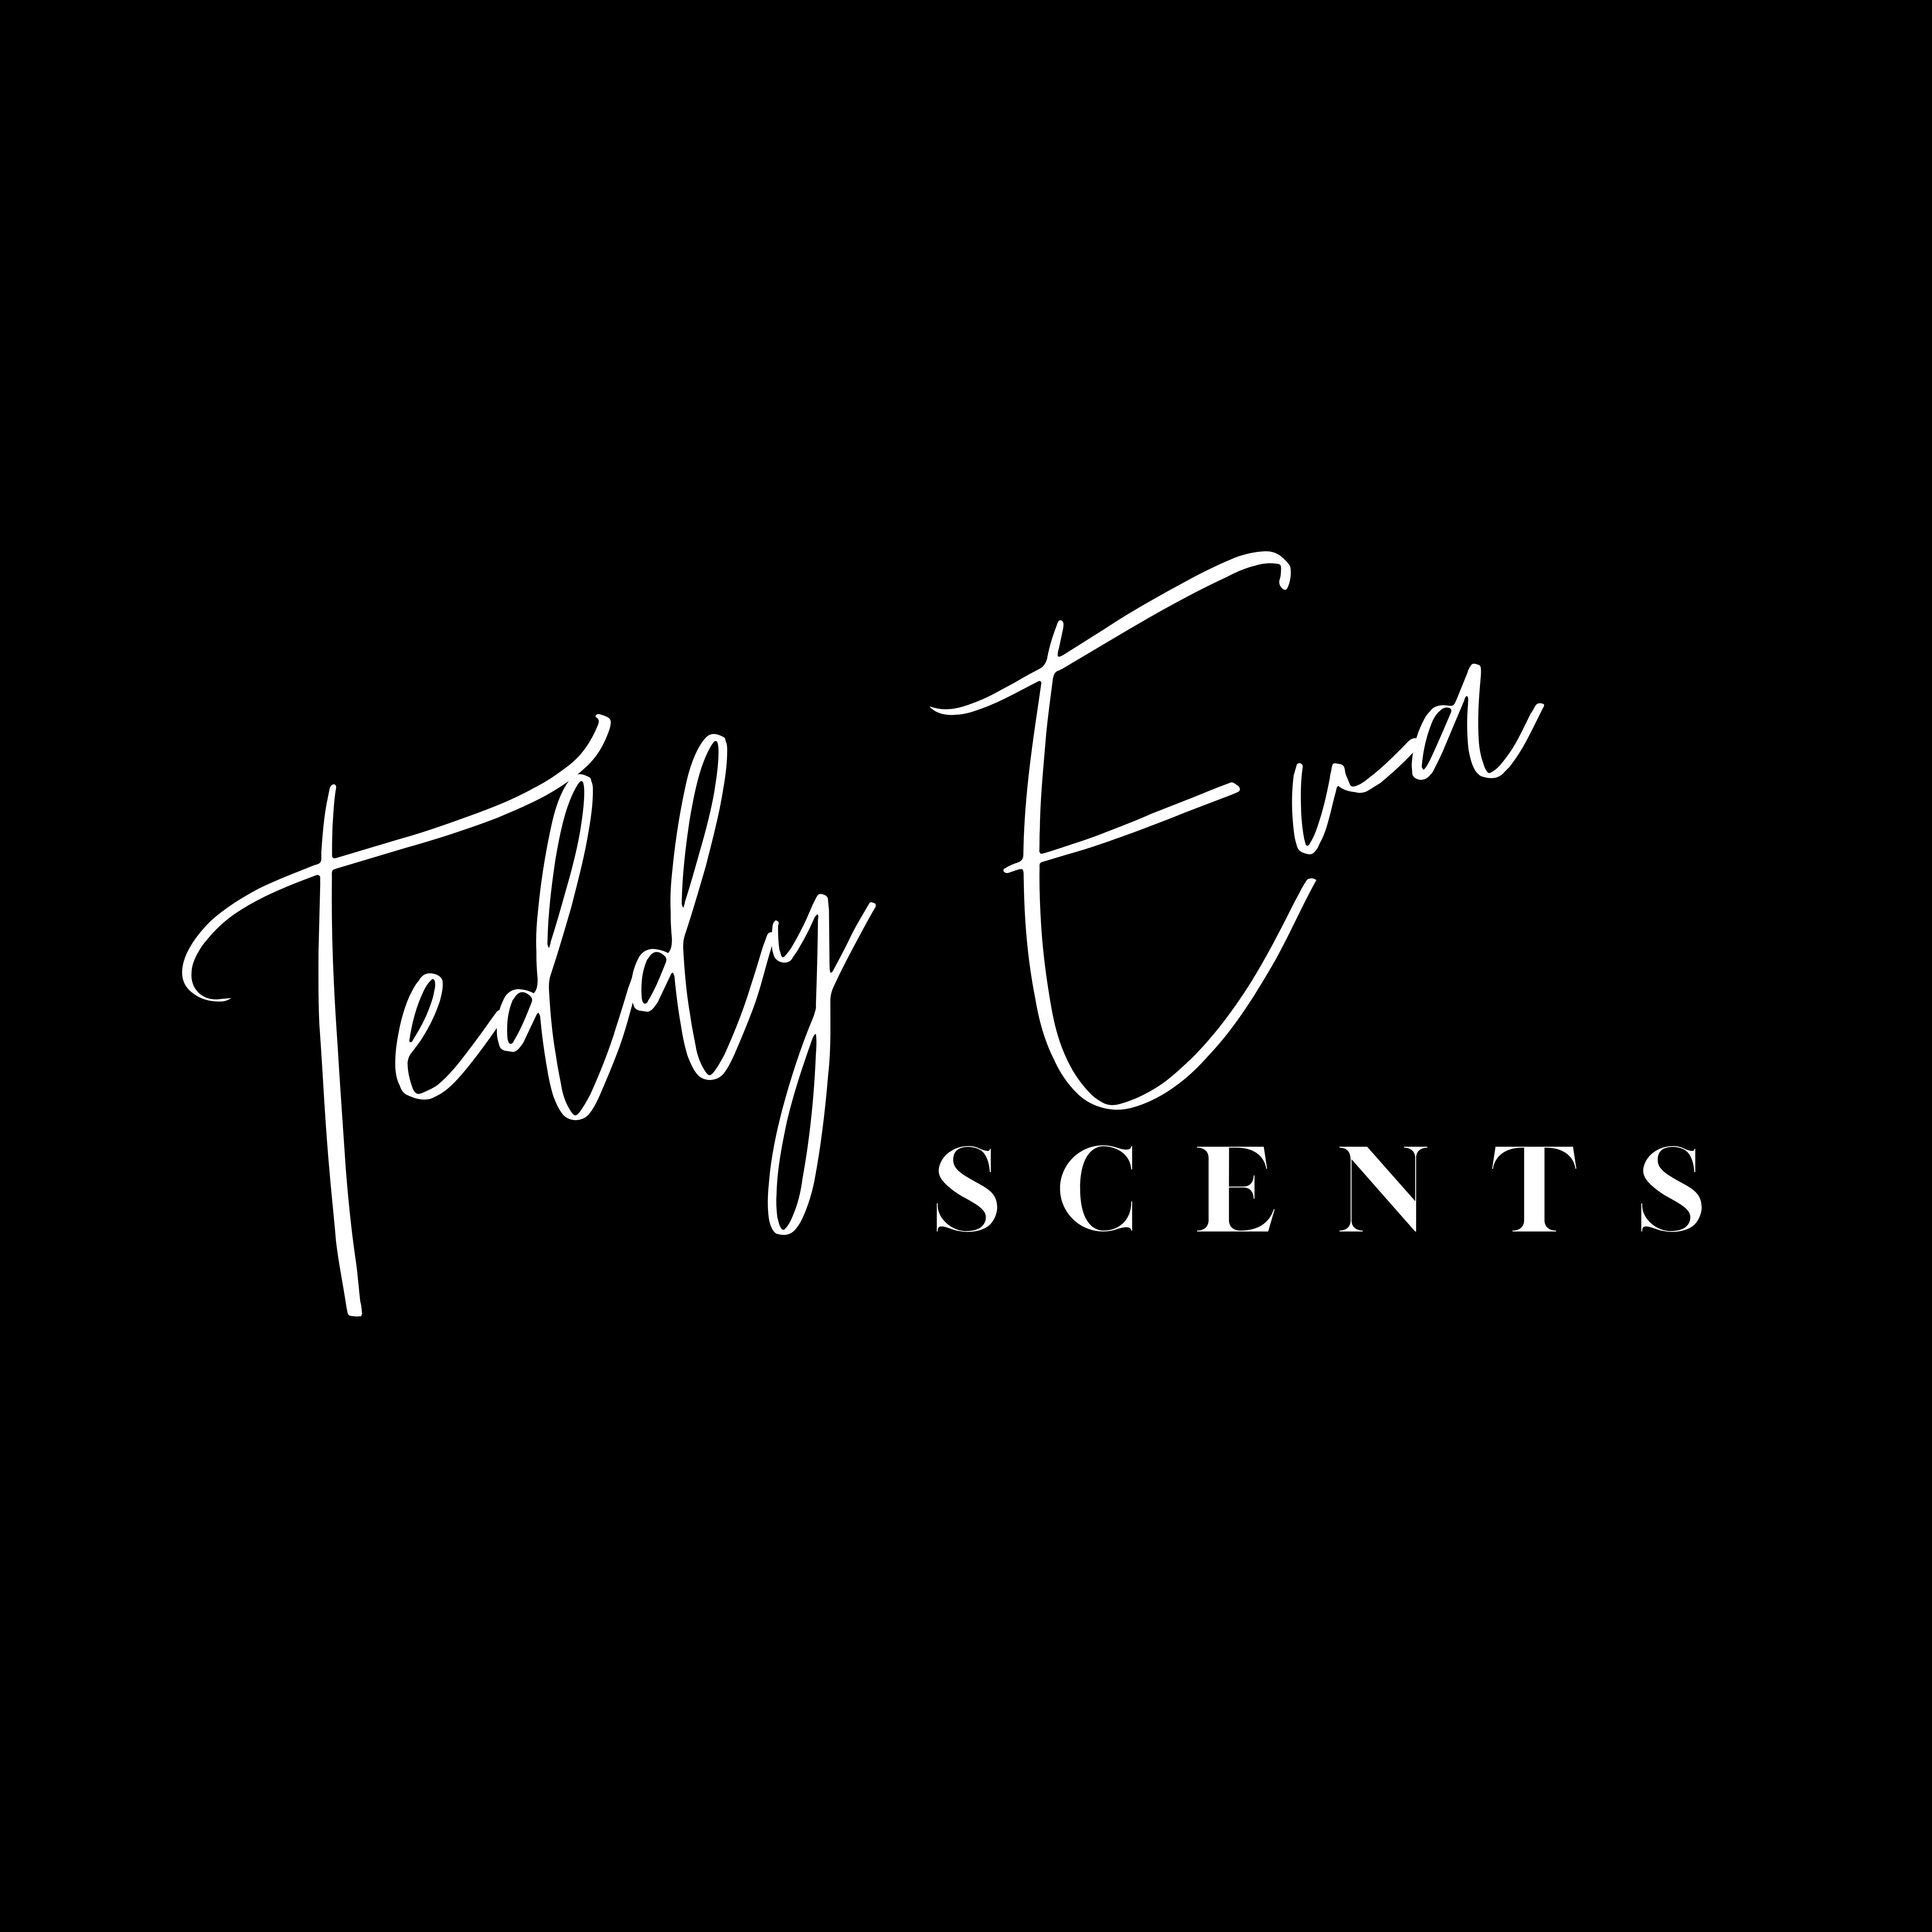 Teddy Eva Scents logo